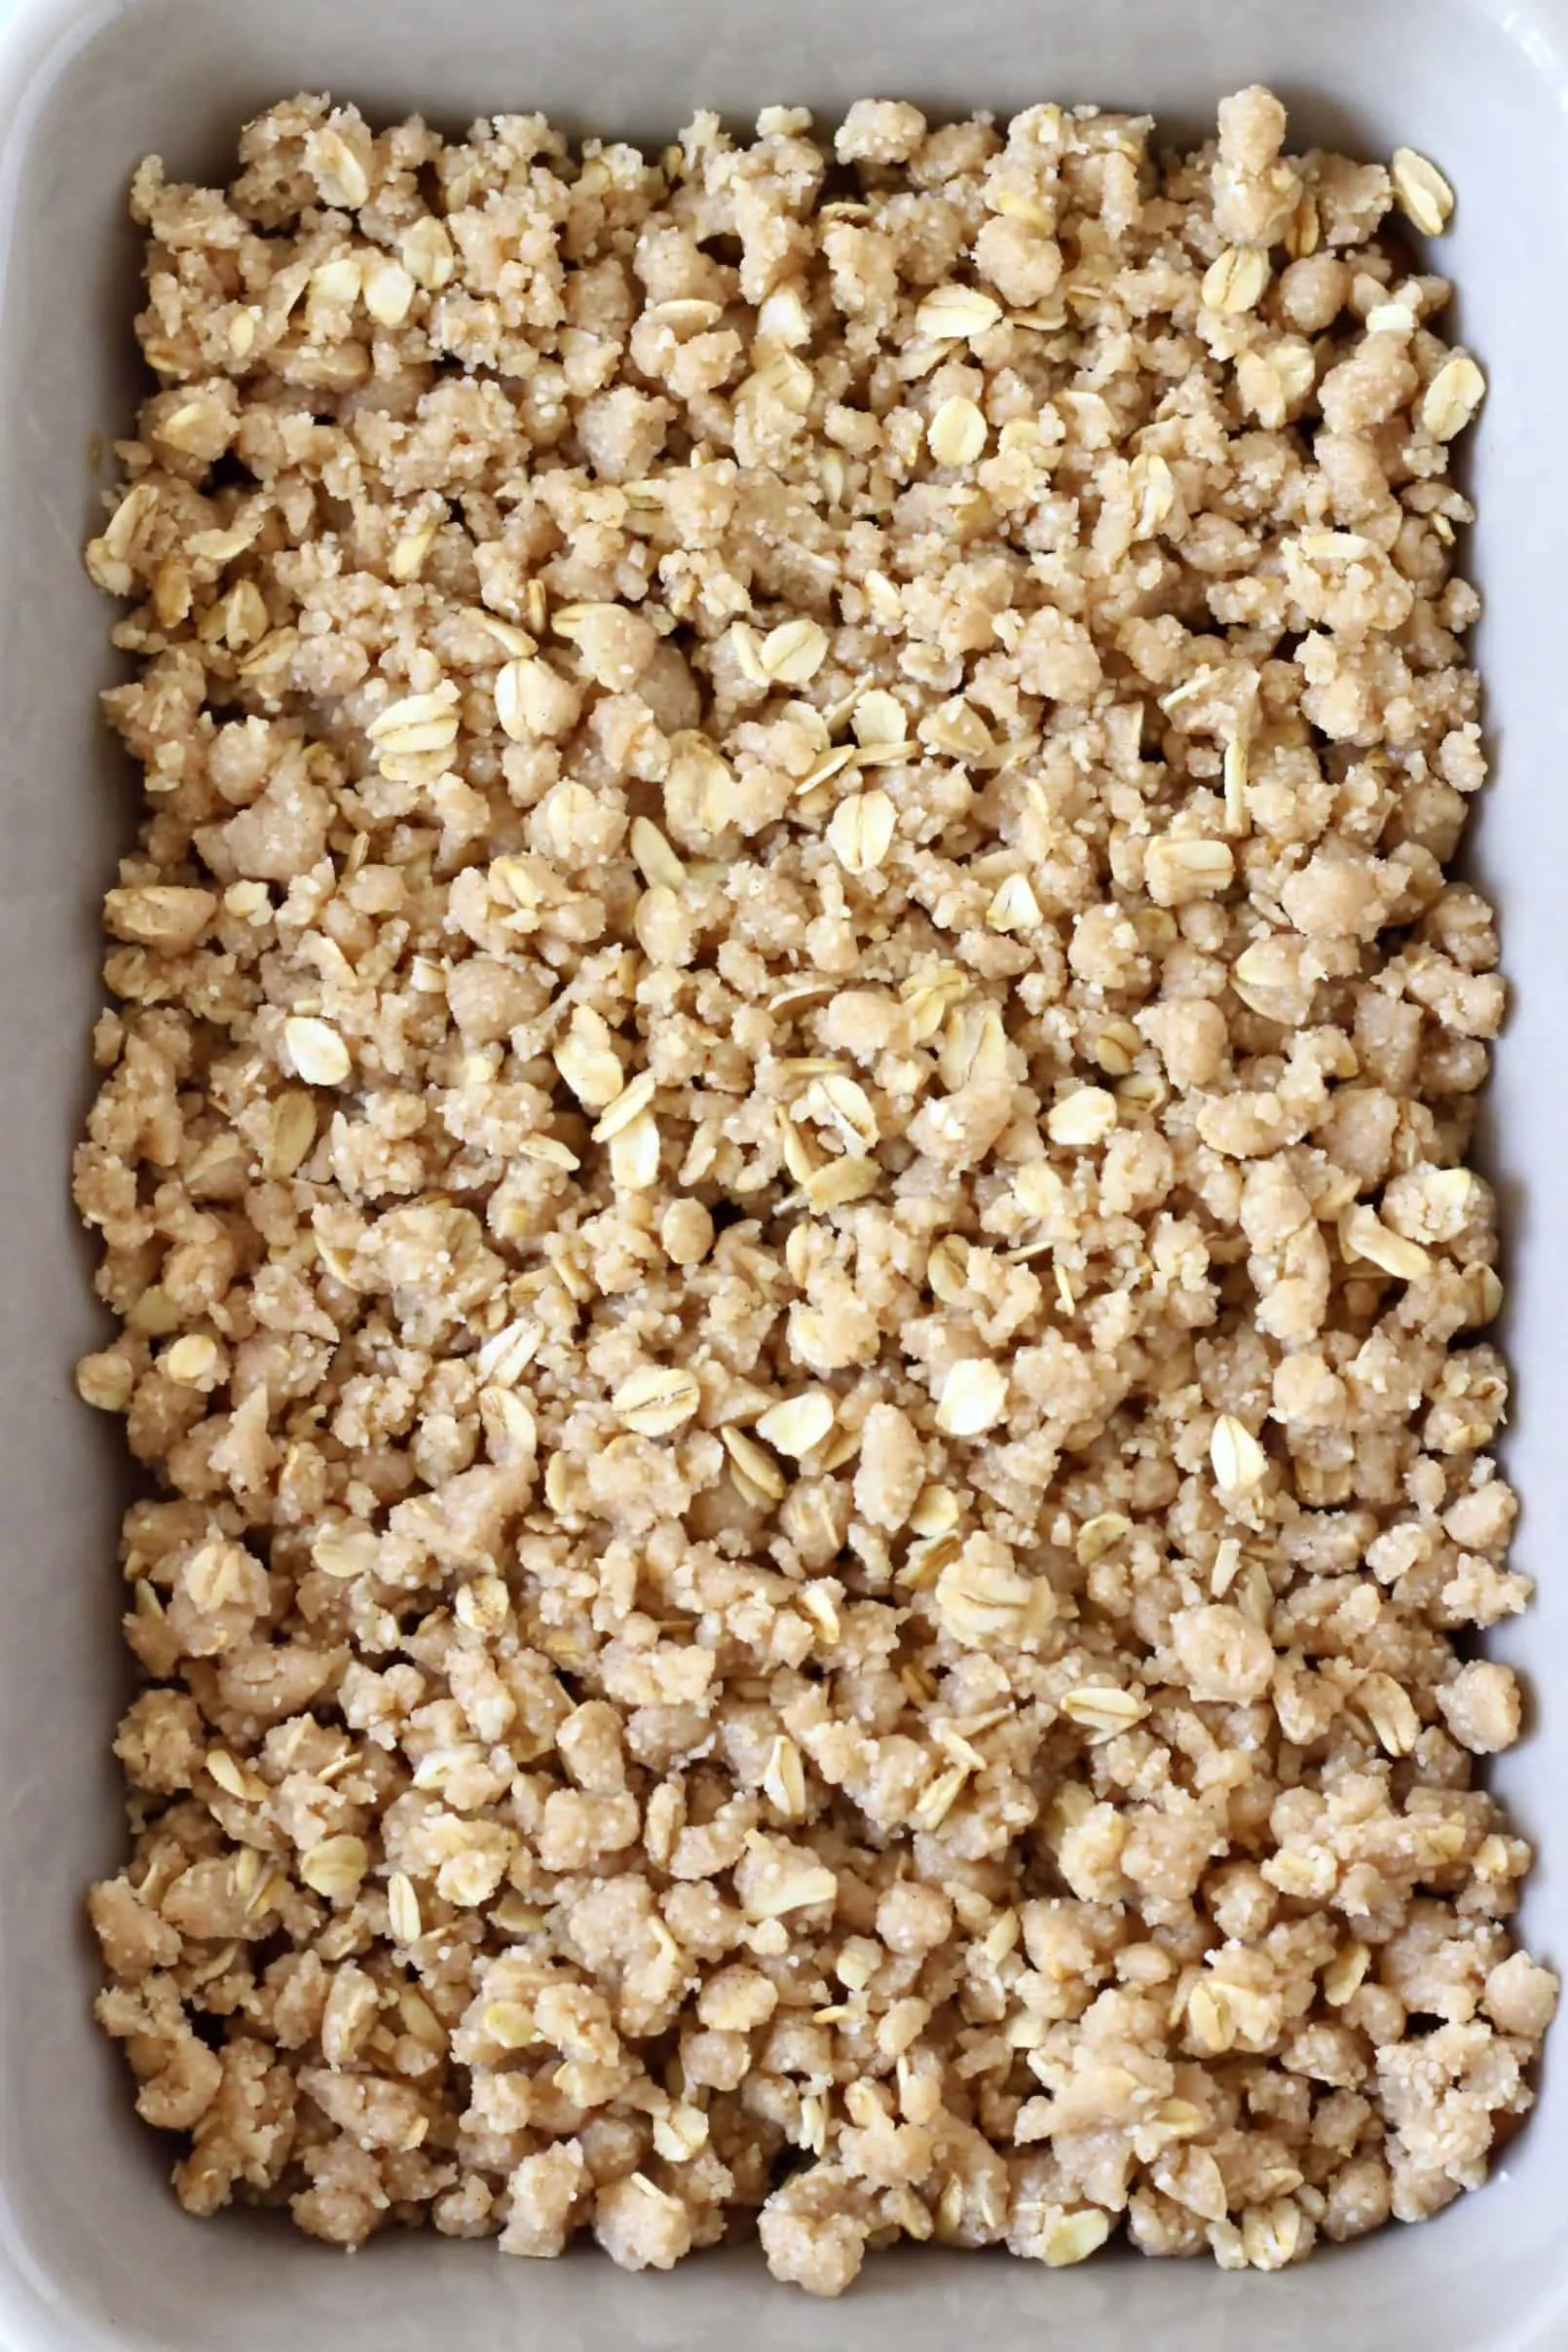 Raw gluten-free vegan crumble mixture with oats in a rectangular baking dish